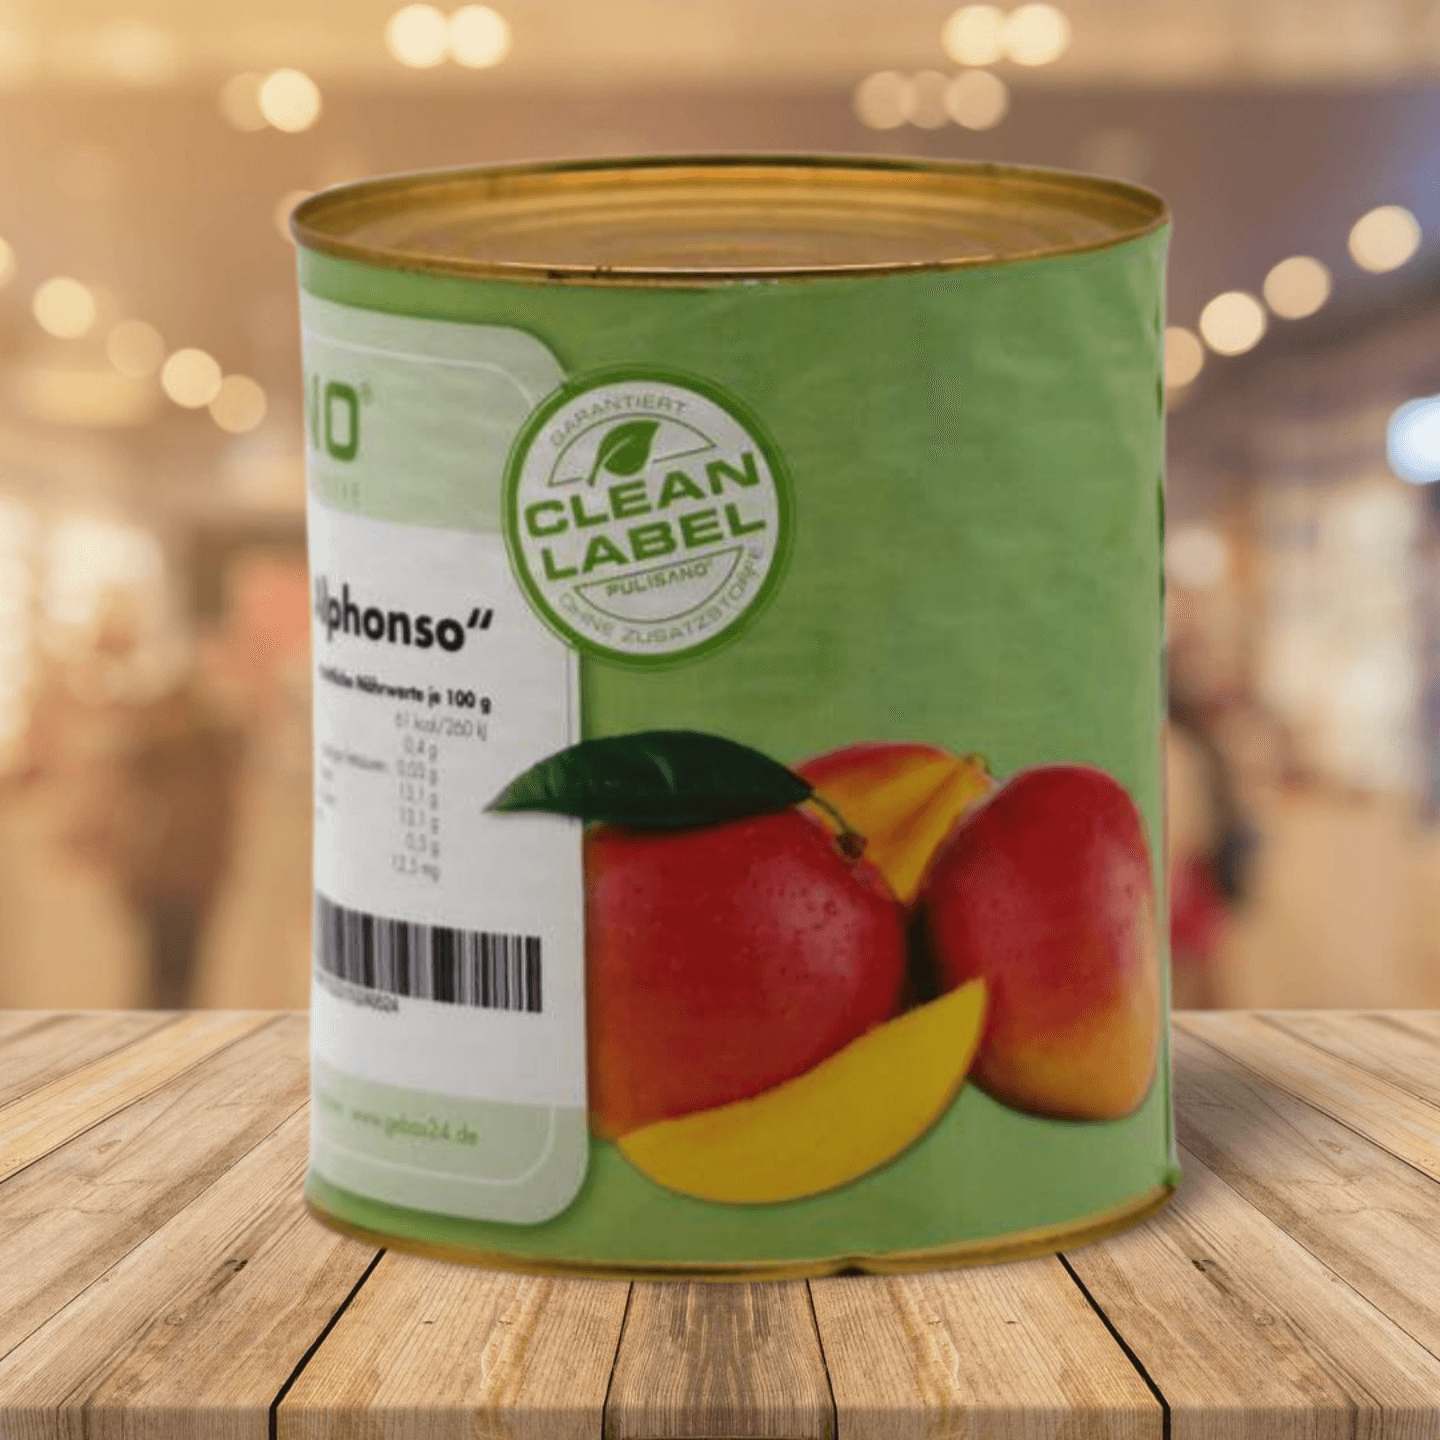 Mangopüree / Fruchtpüree 100% Mango Alphonso 3,1kg